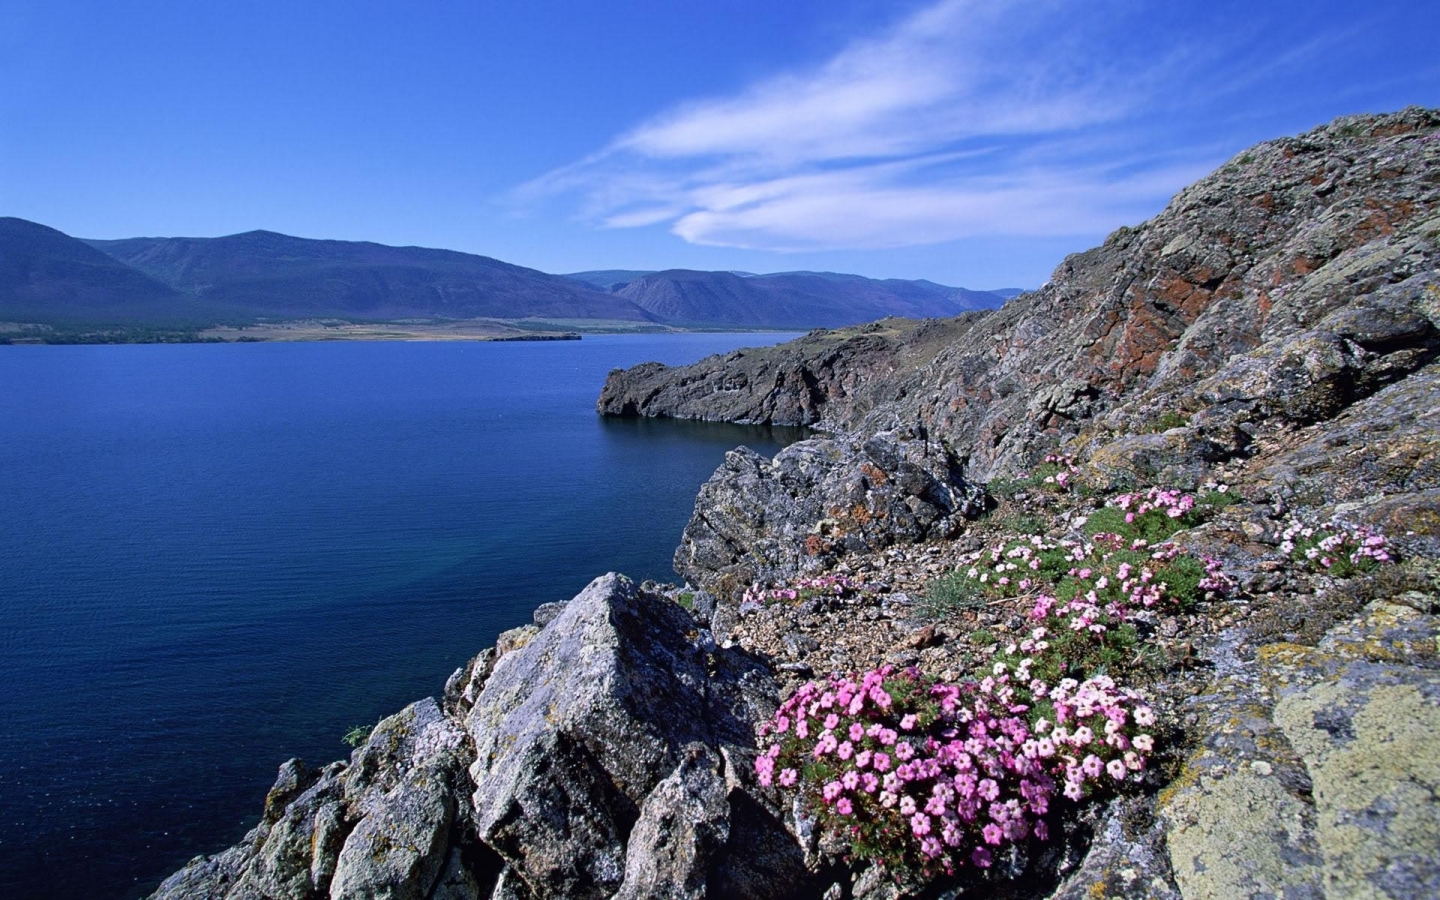 Rocky Shoreline Barakchin Island Lake Baikal for 1440 x 900 widescreen resolution